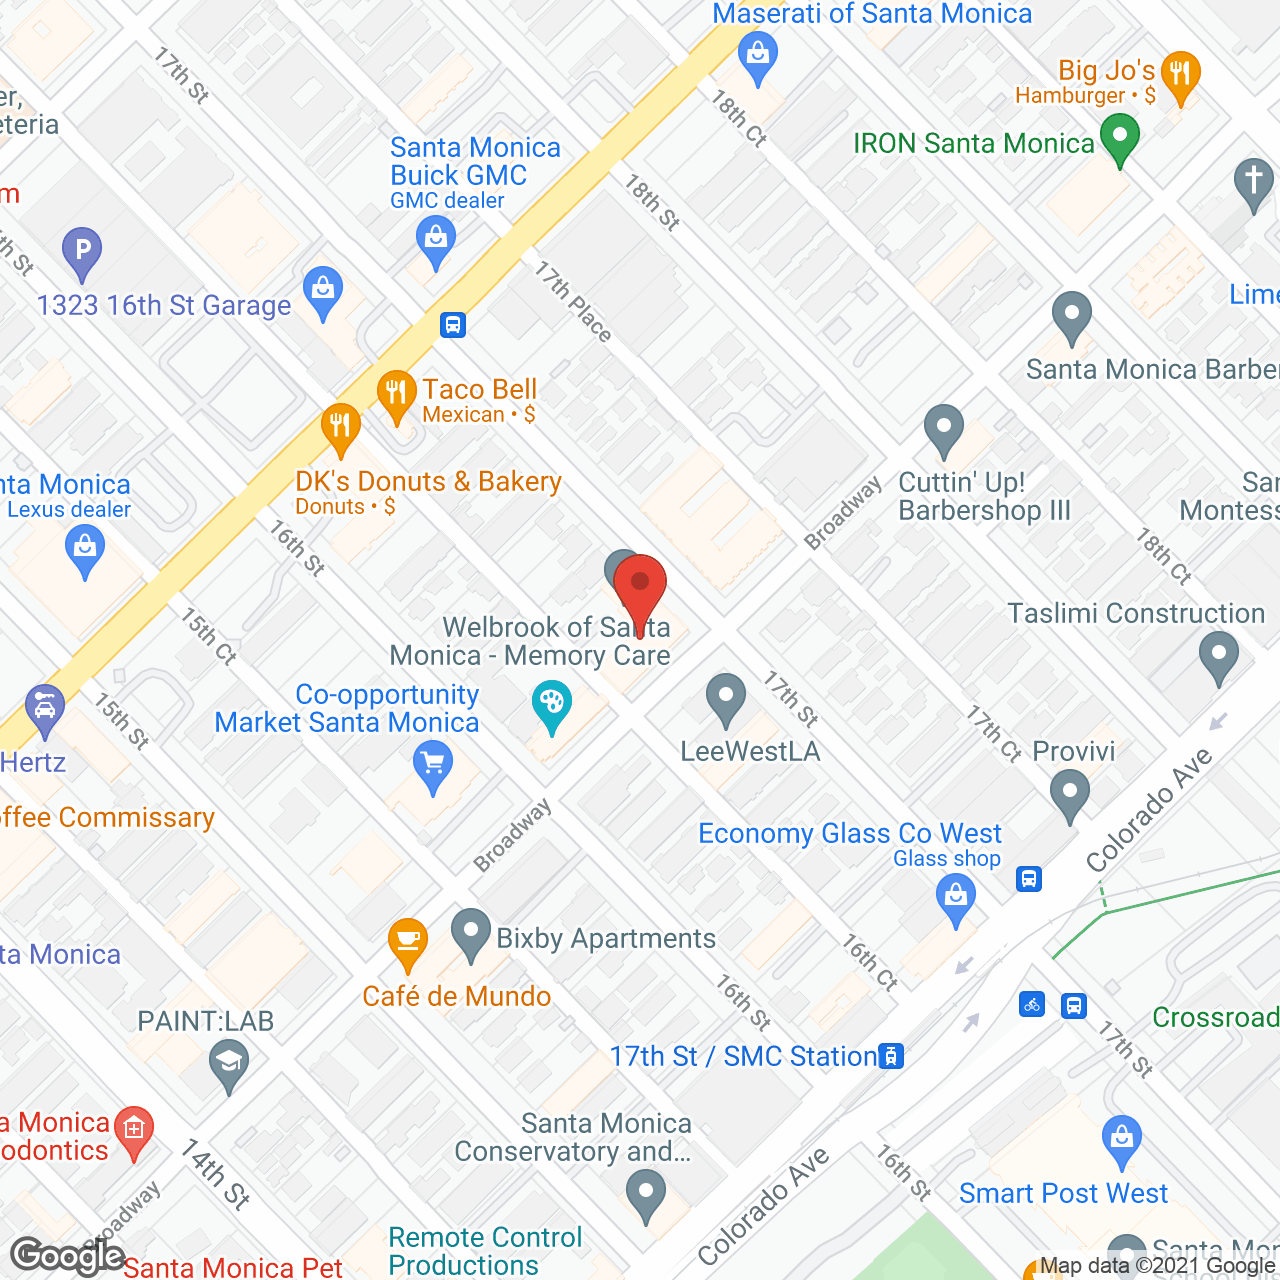 Welbrook Santa Monica in google map